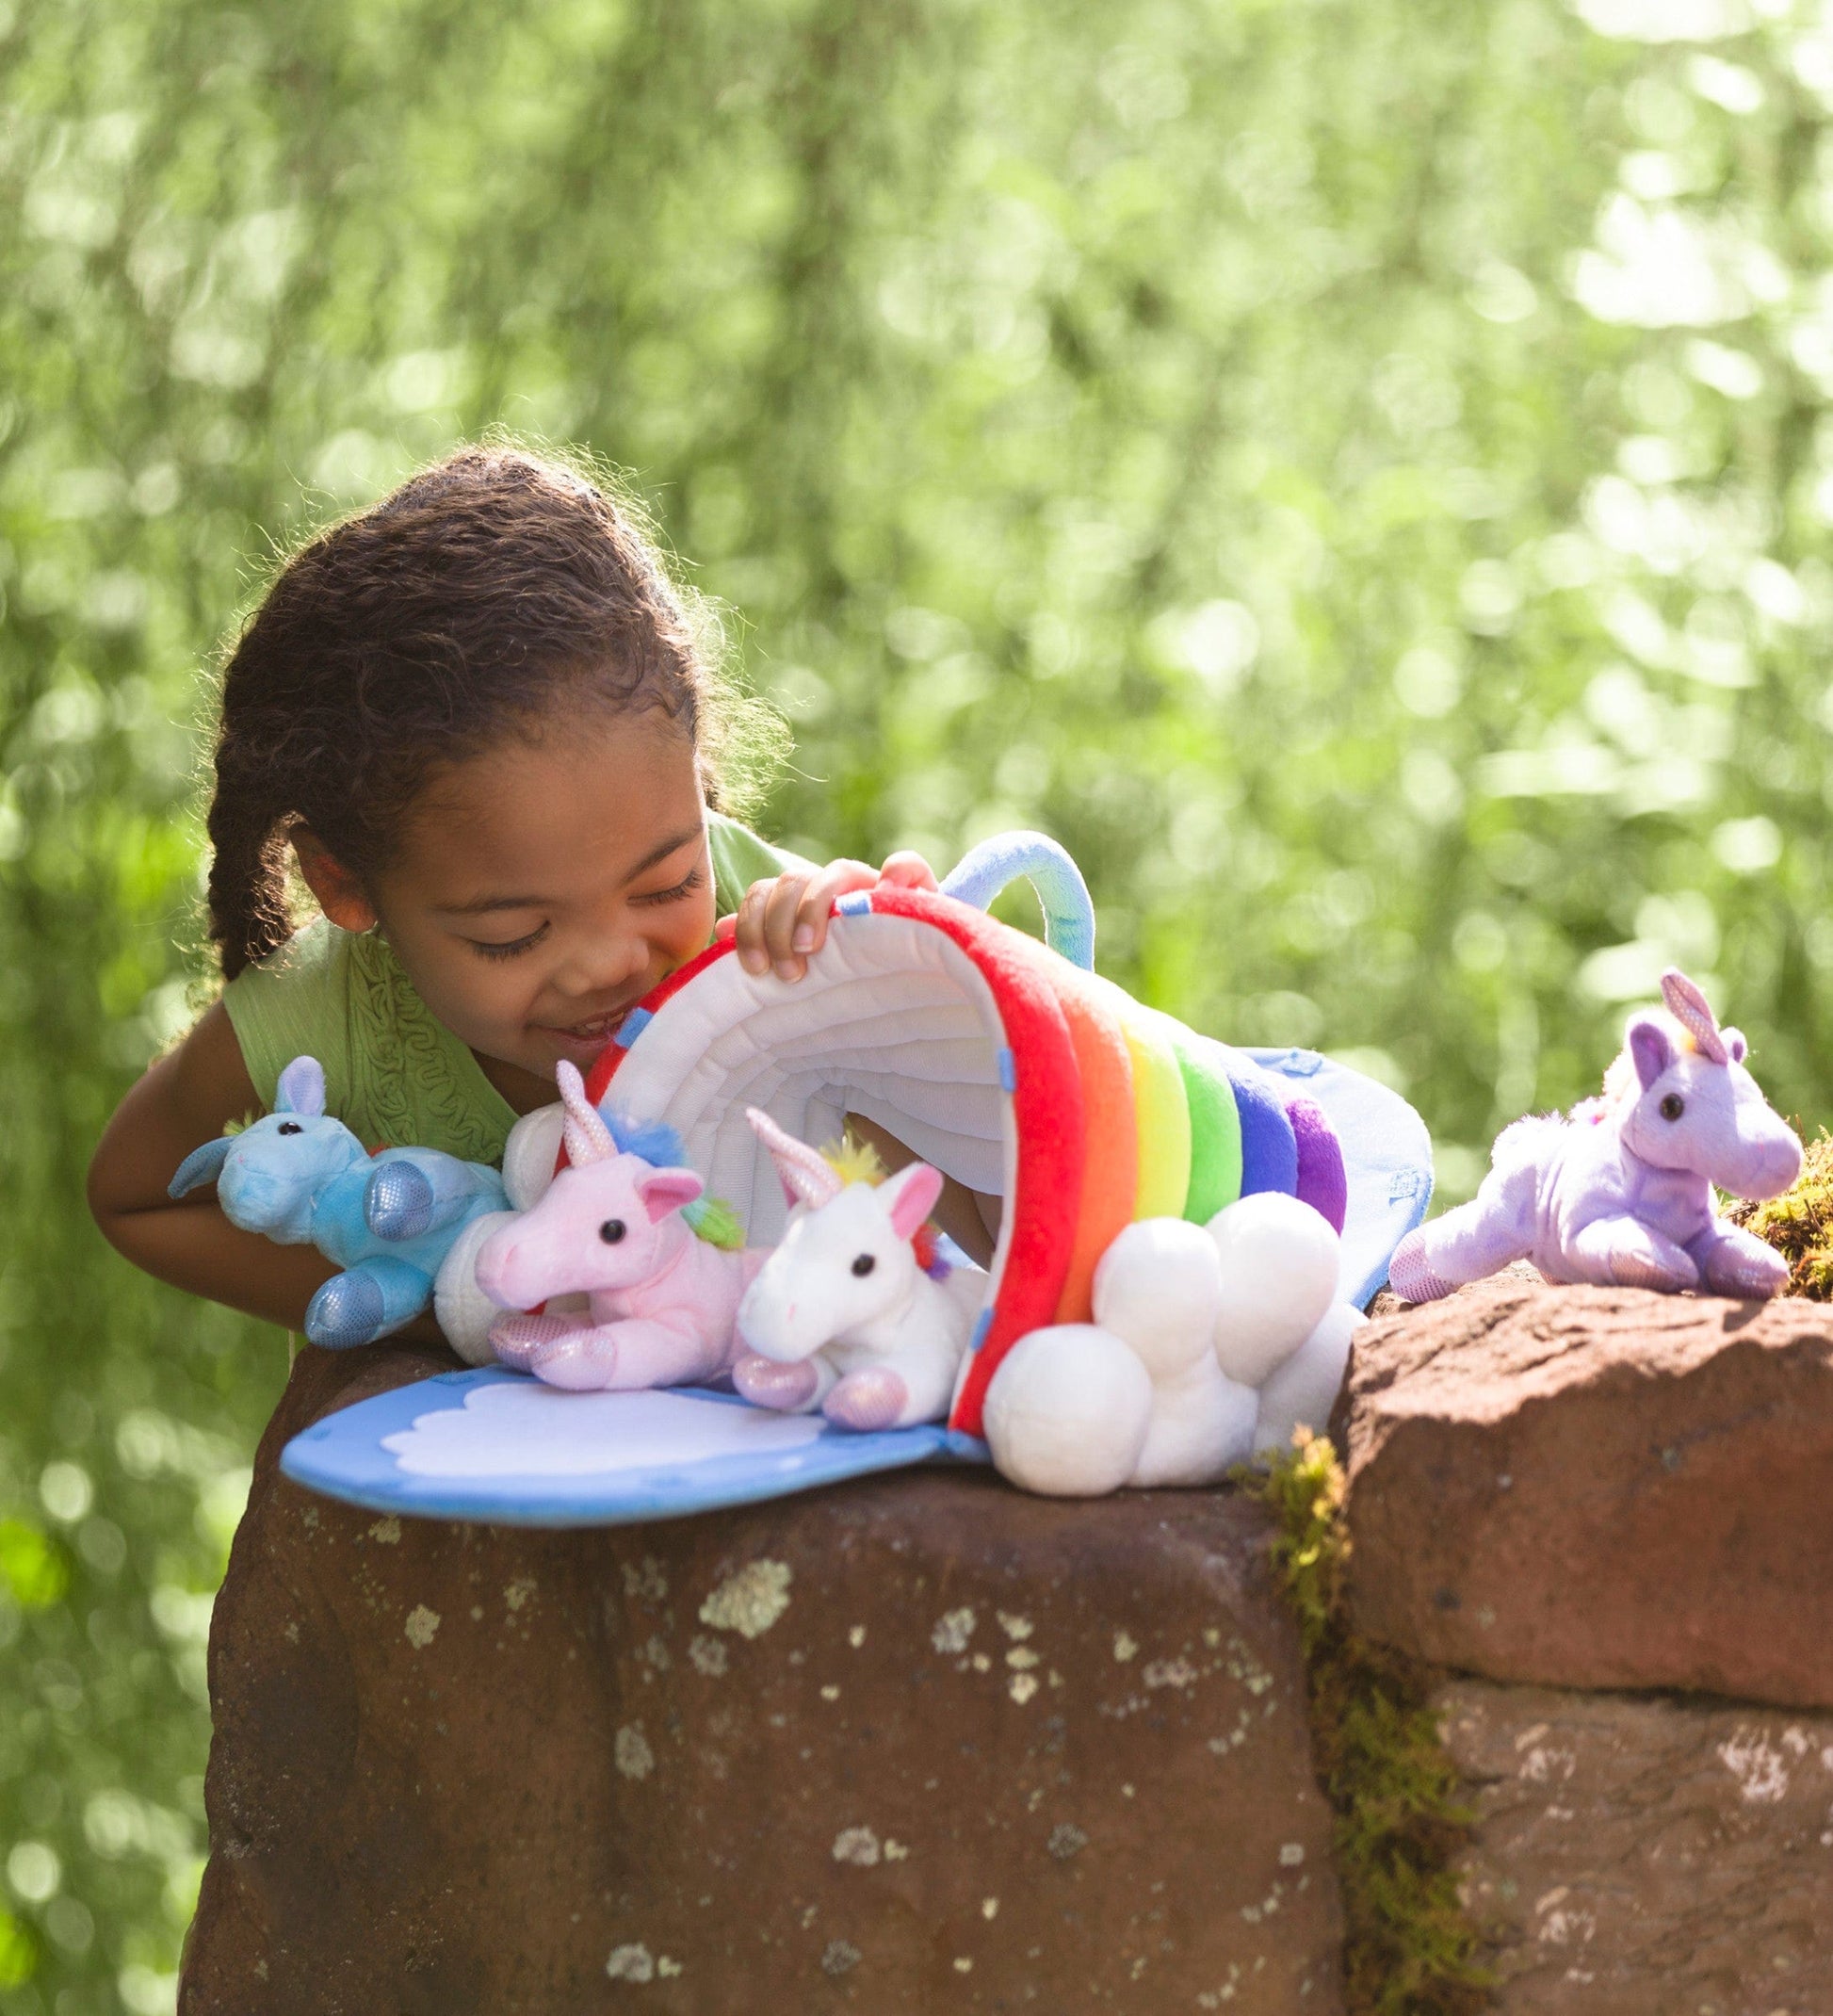 Rainbow Friends Cute Baby Blue Plush 9 Stuffed Doll Christmas Gift For  Kids